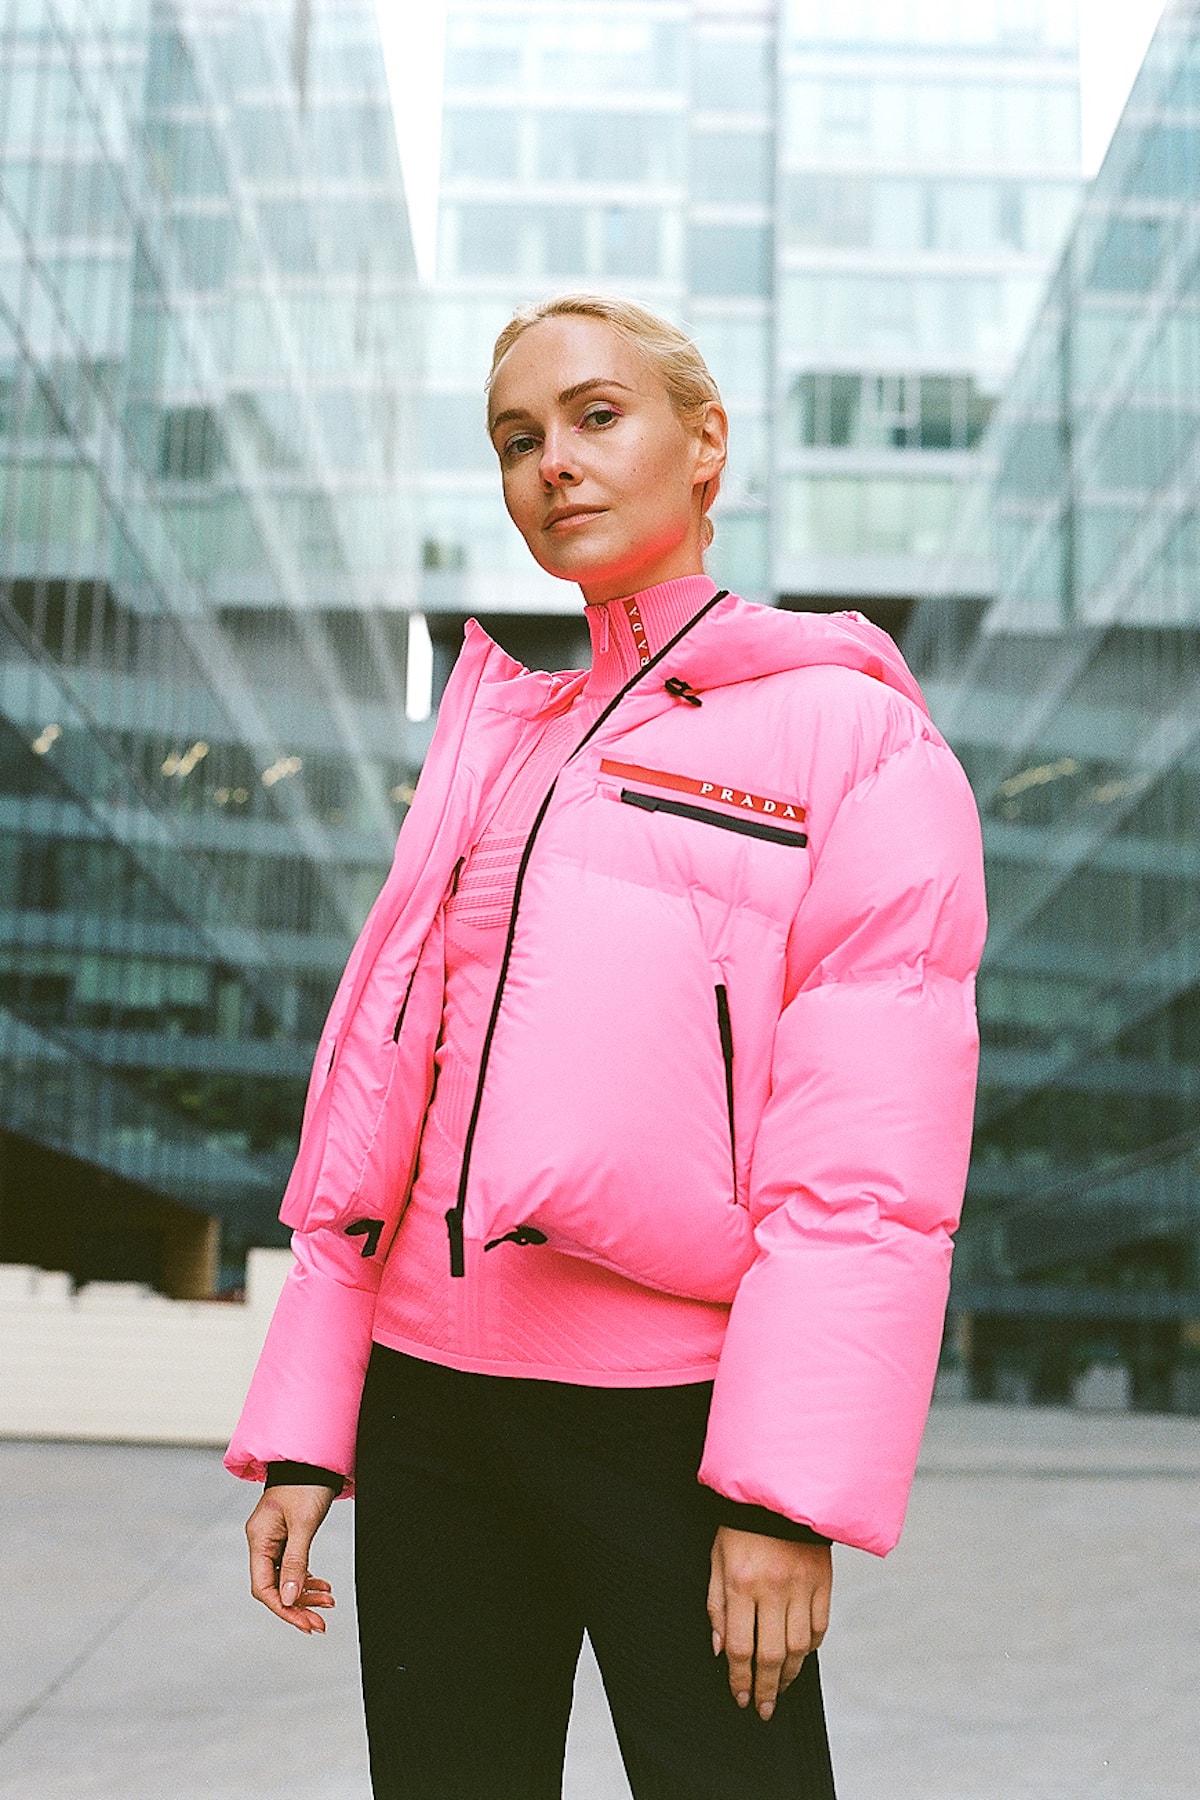 Prada Linea Rossa Fall/Winter 19 Collection Drop Release Olga Karput Luxury Sportswear Range Neon Jackets Logo 